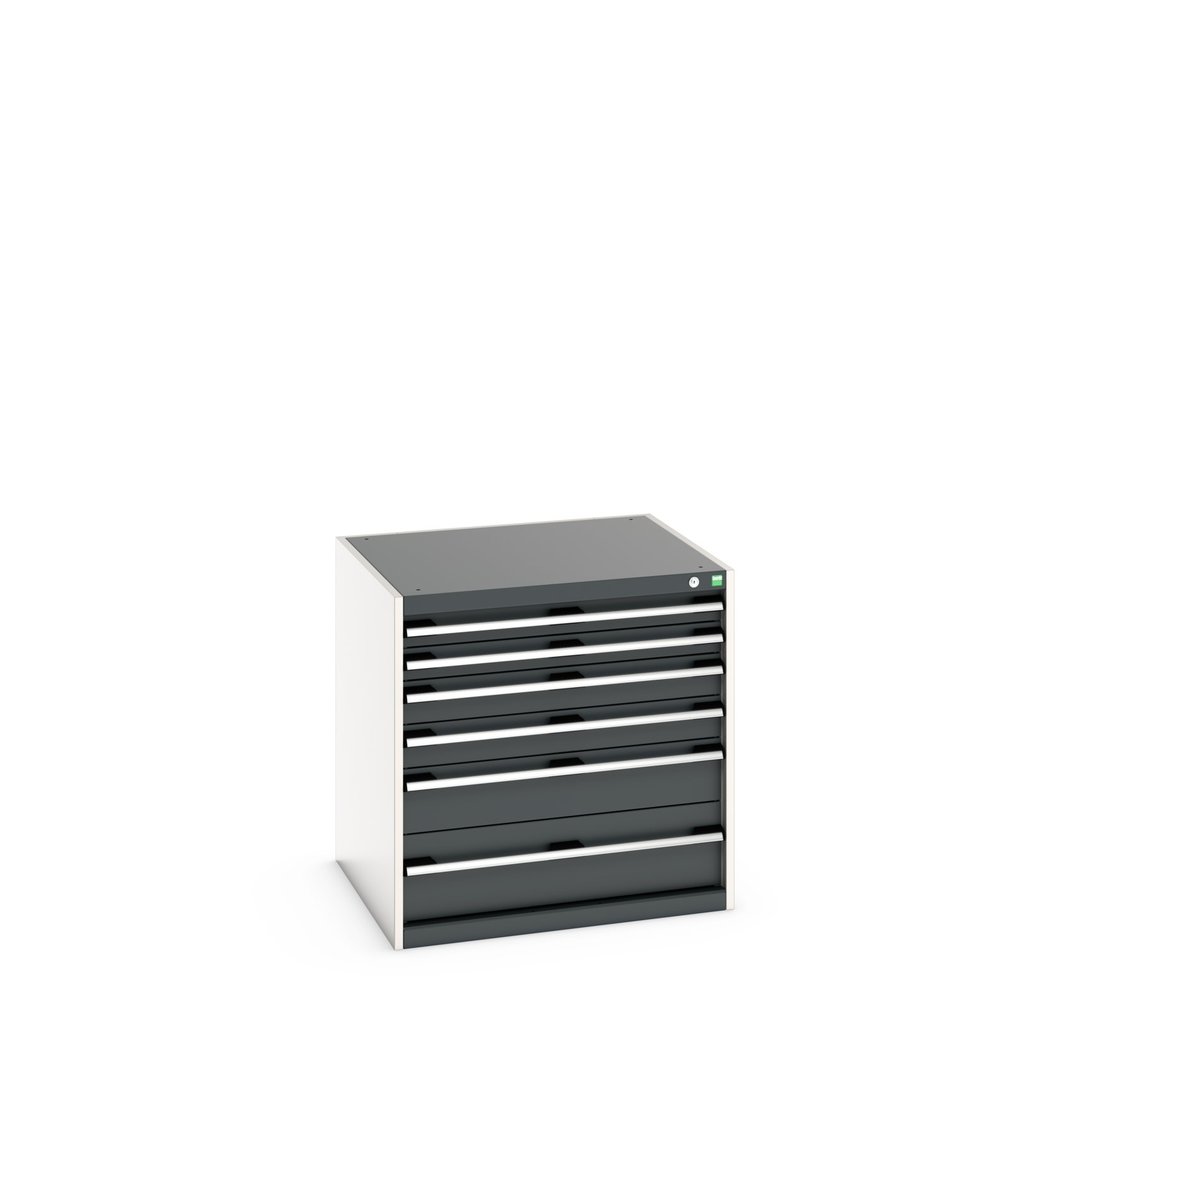 40028088. - cubio drawer cabinet